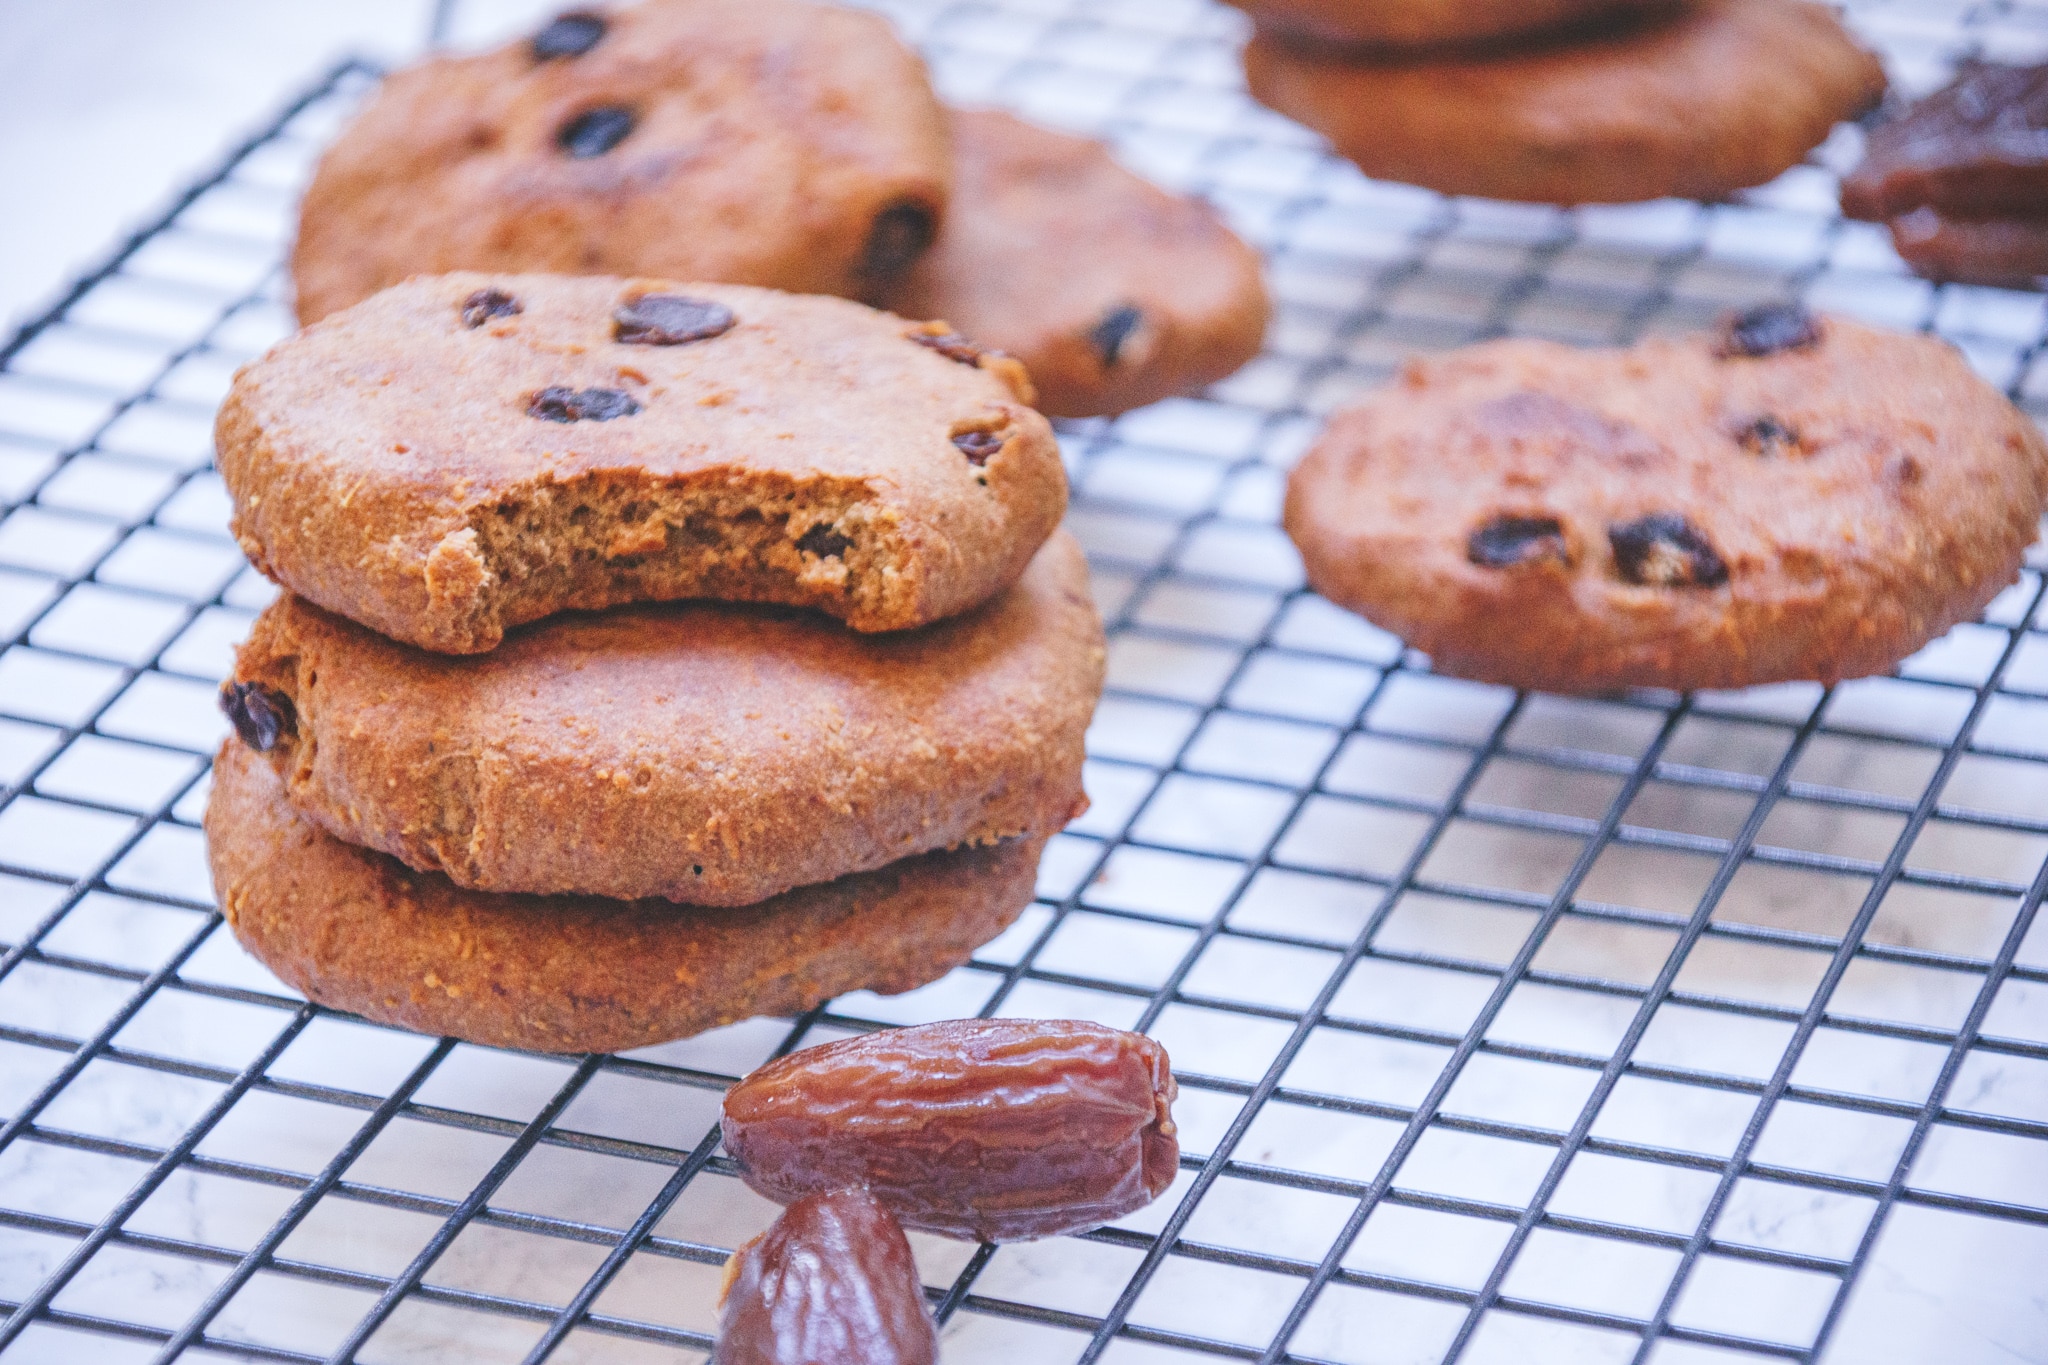 Dattel-Rosinen-Cookies | vegan & einfach